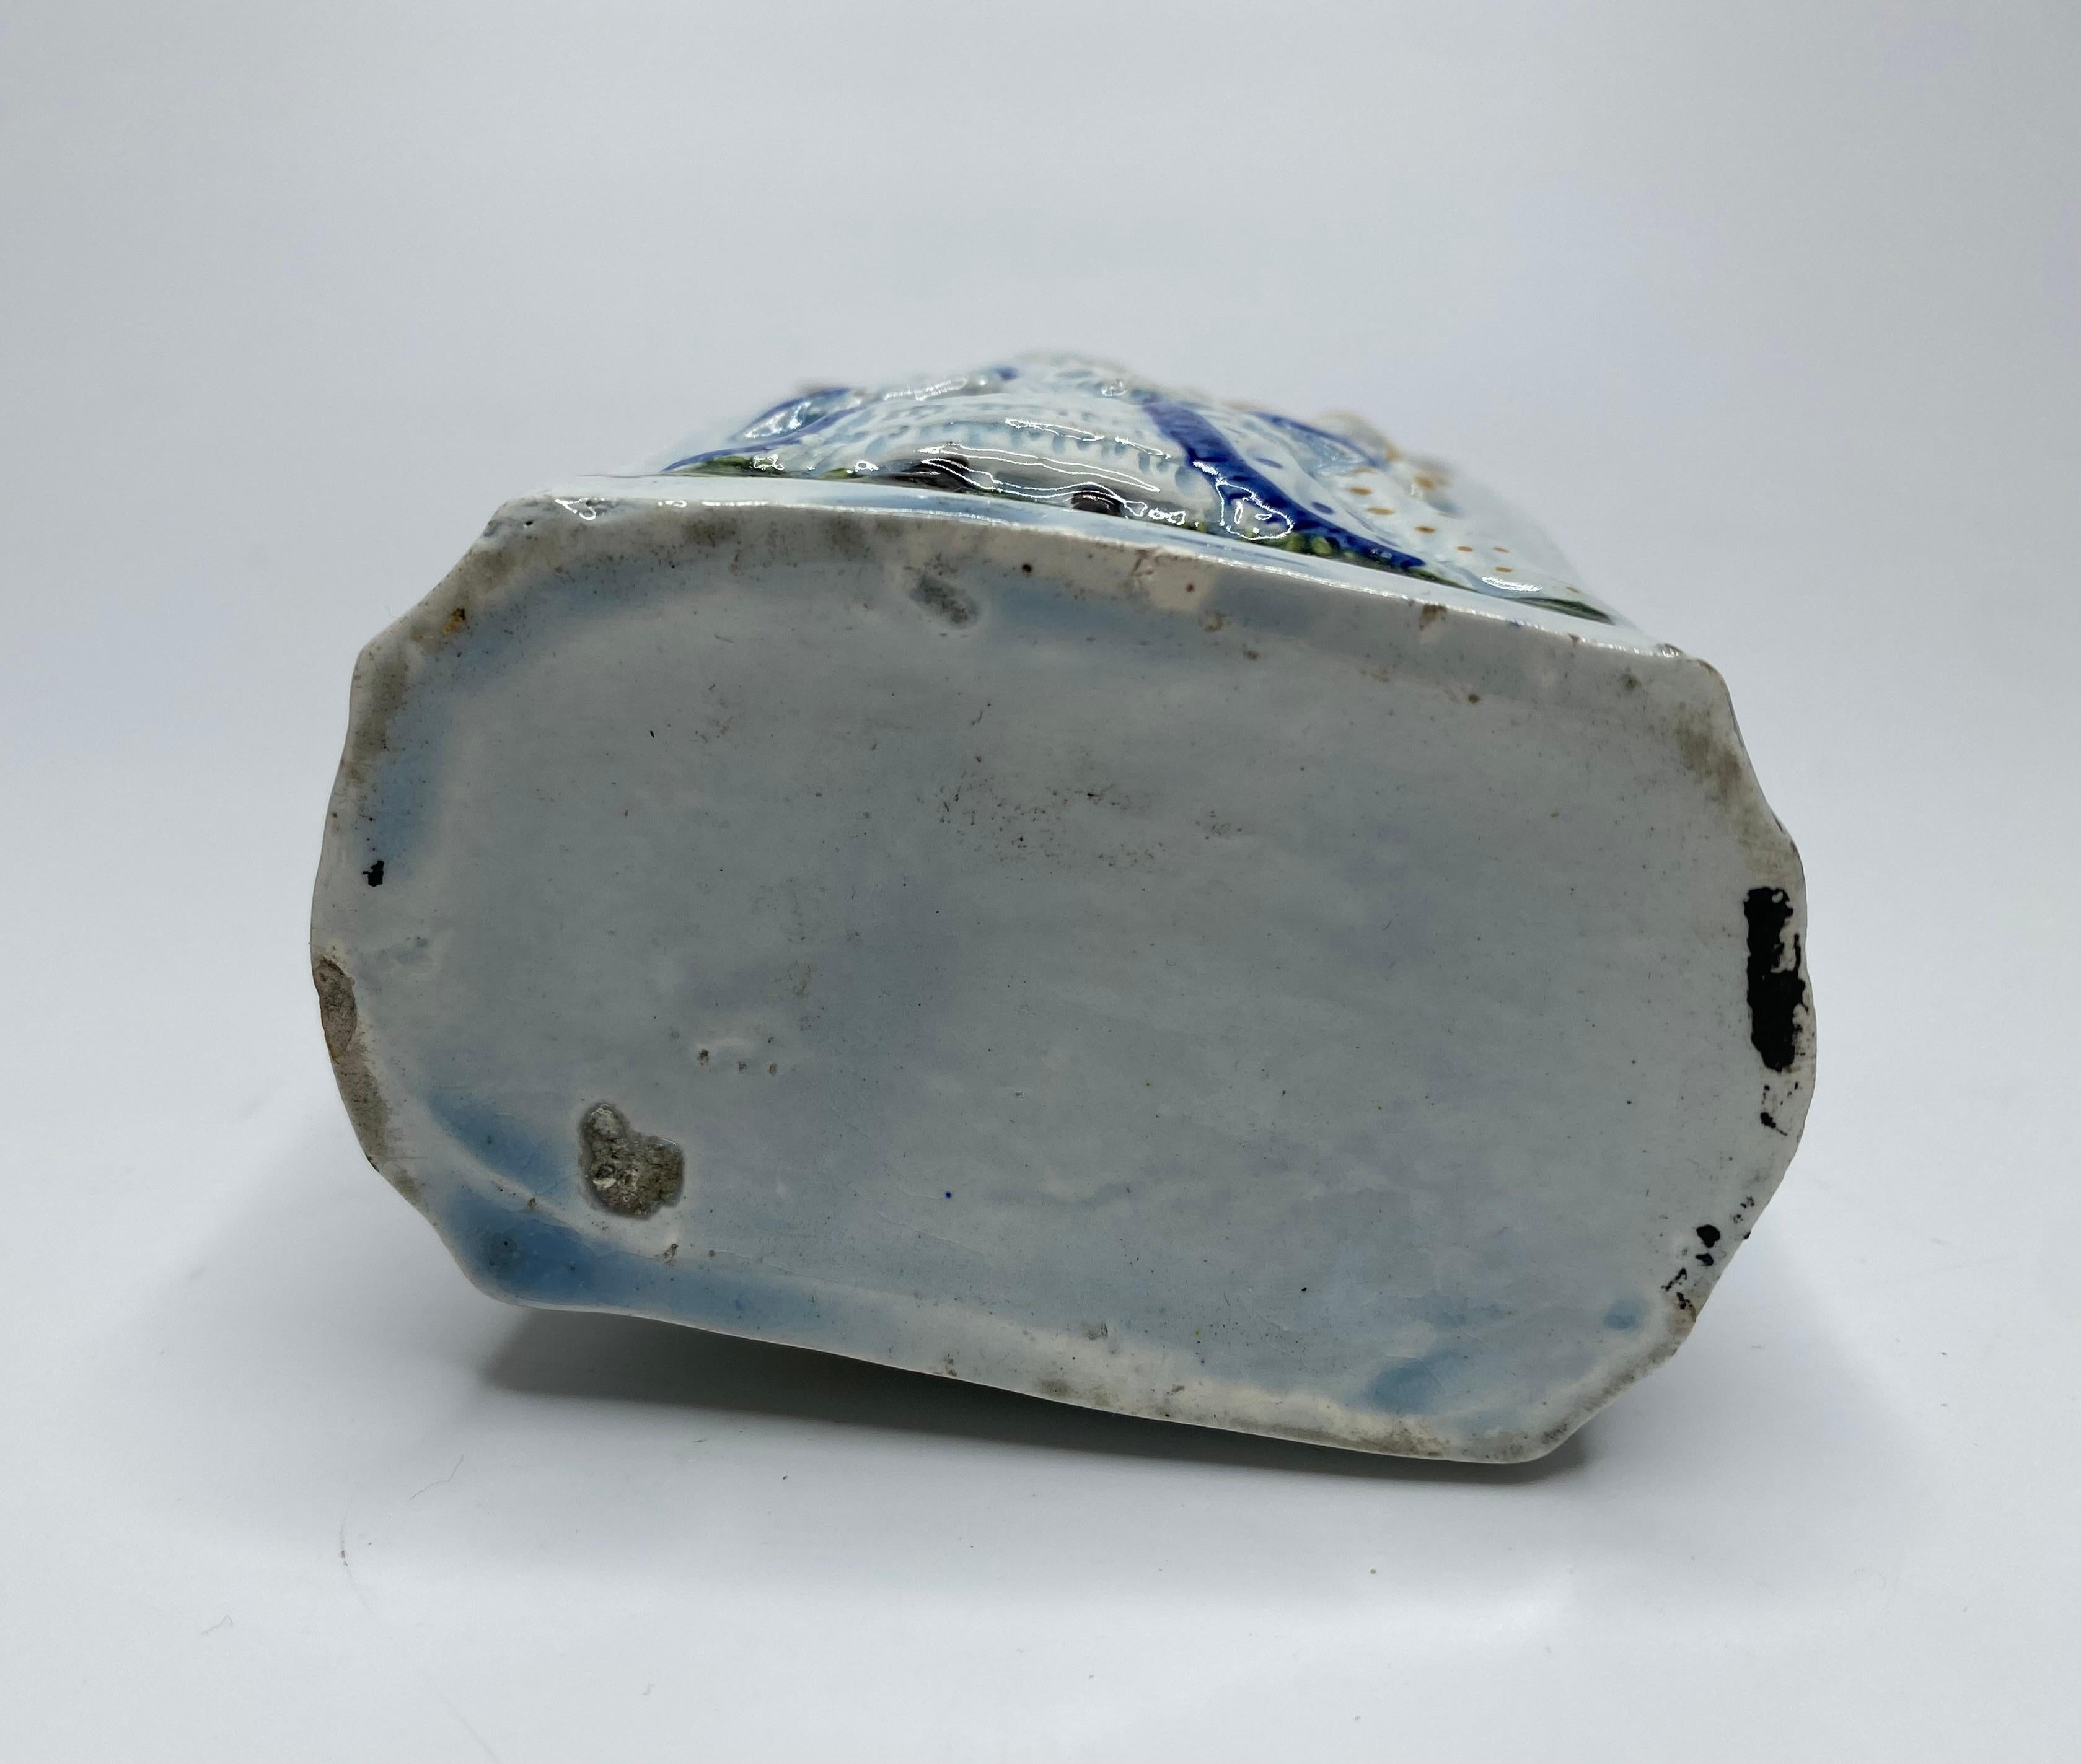 Prattware pottery ‘Macaroni’ tea caddy and cover, c. 1800. 3